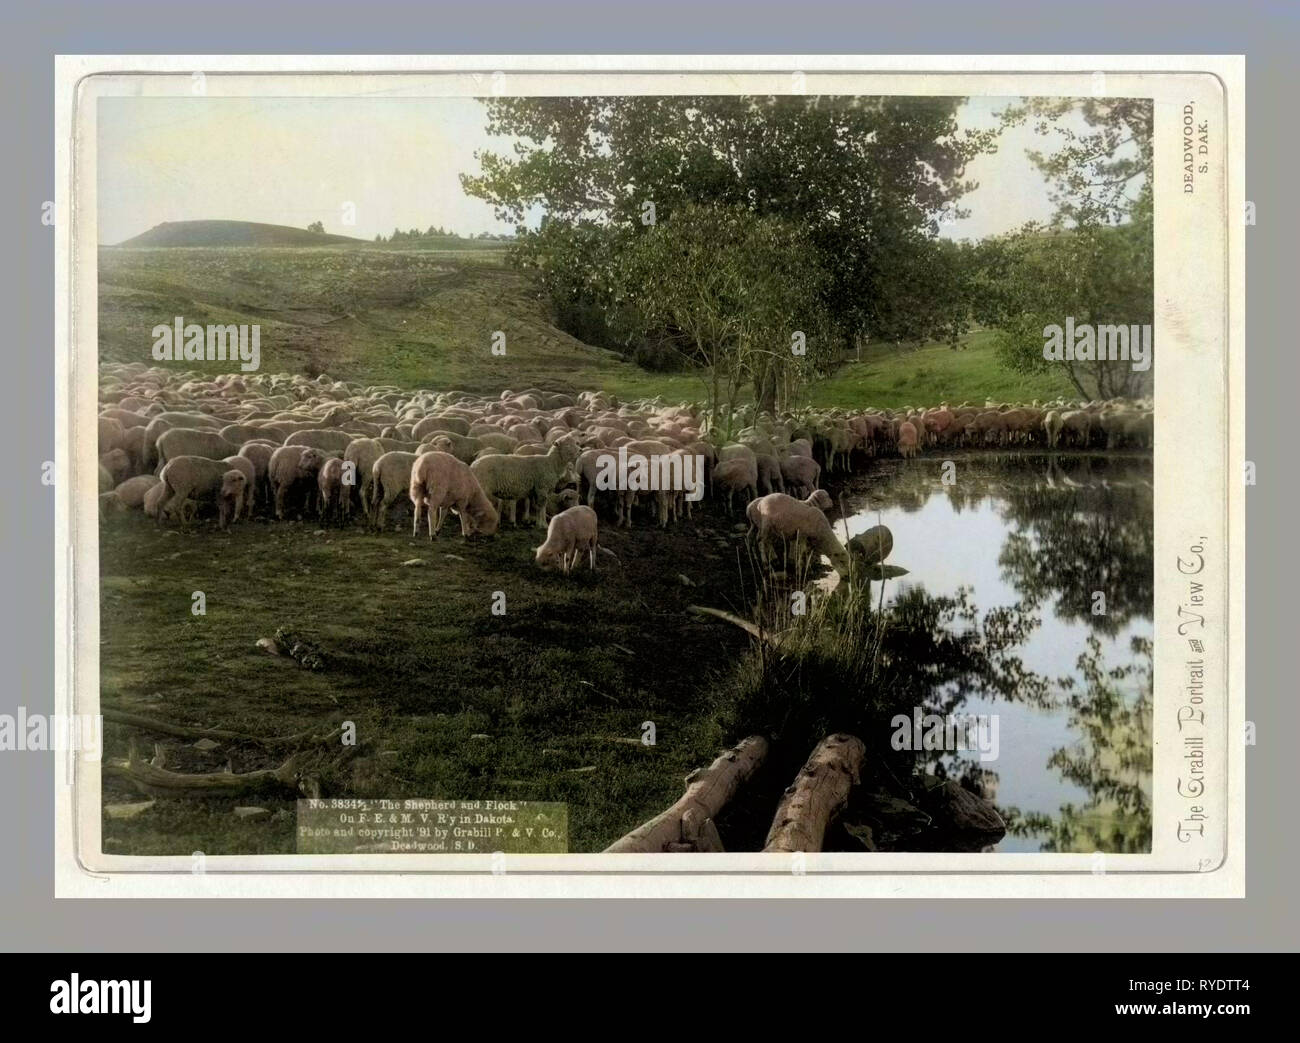 The Shepherd and Flock. On F.E. & M.V. R'Y. In Dakota Stock Photo